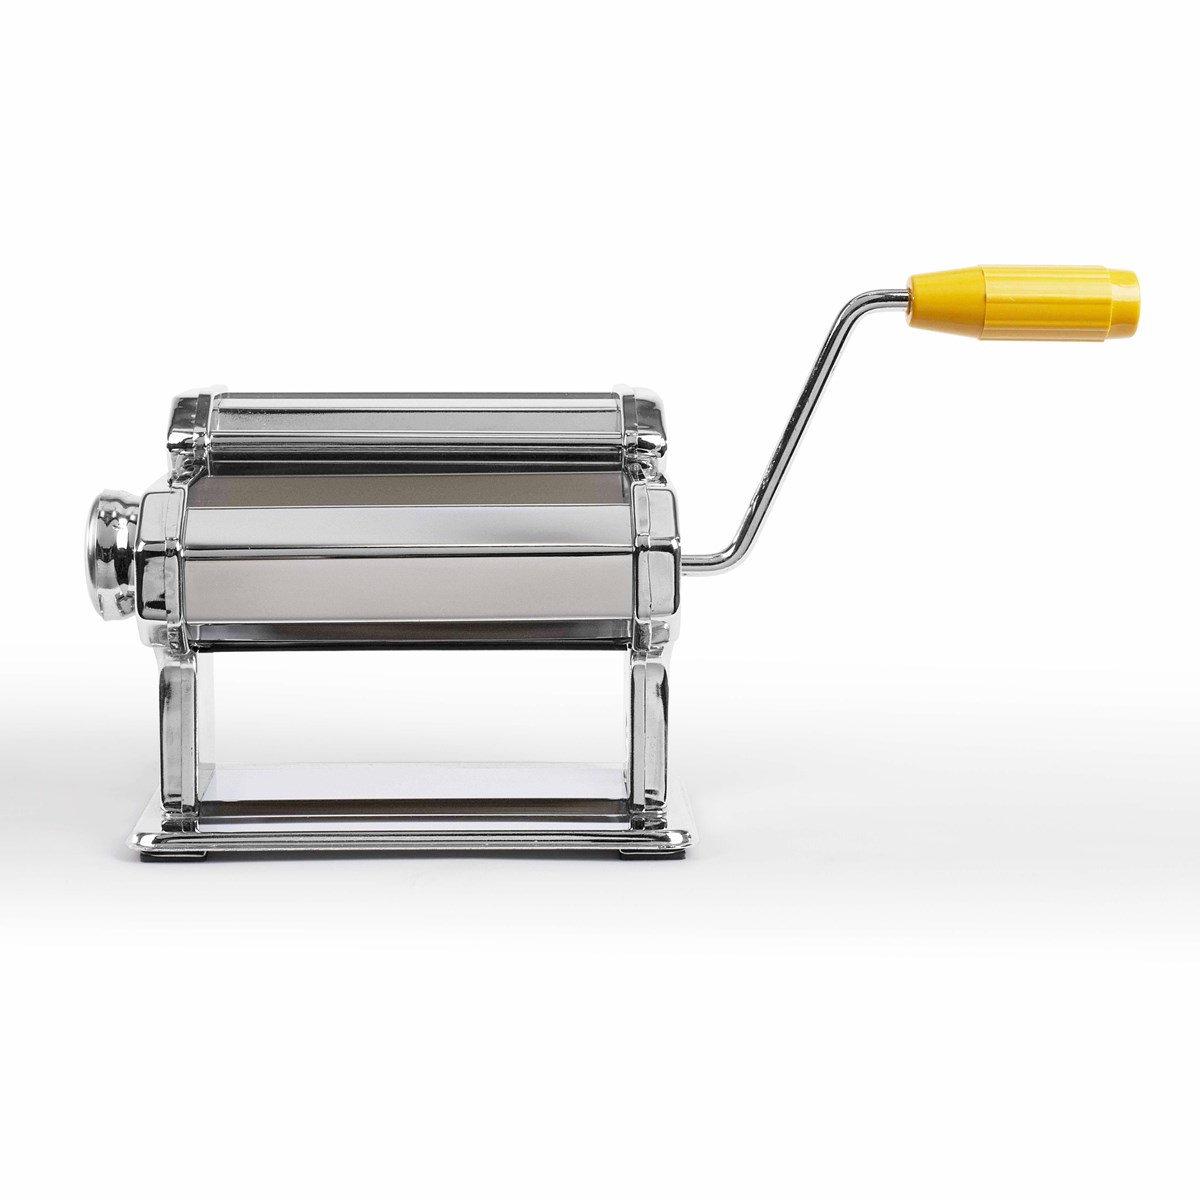 Machine à ravioli et spaghetti en acier inoxydable gris